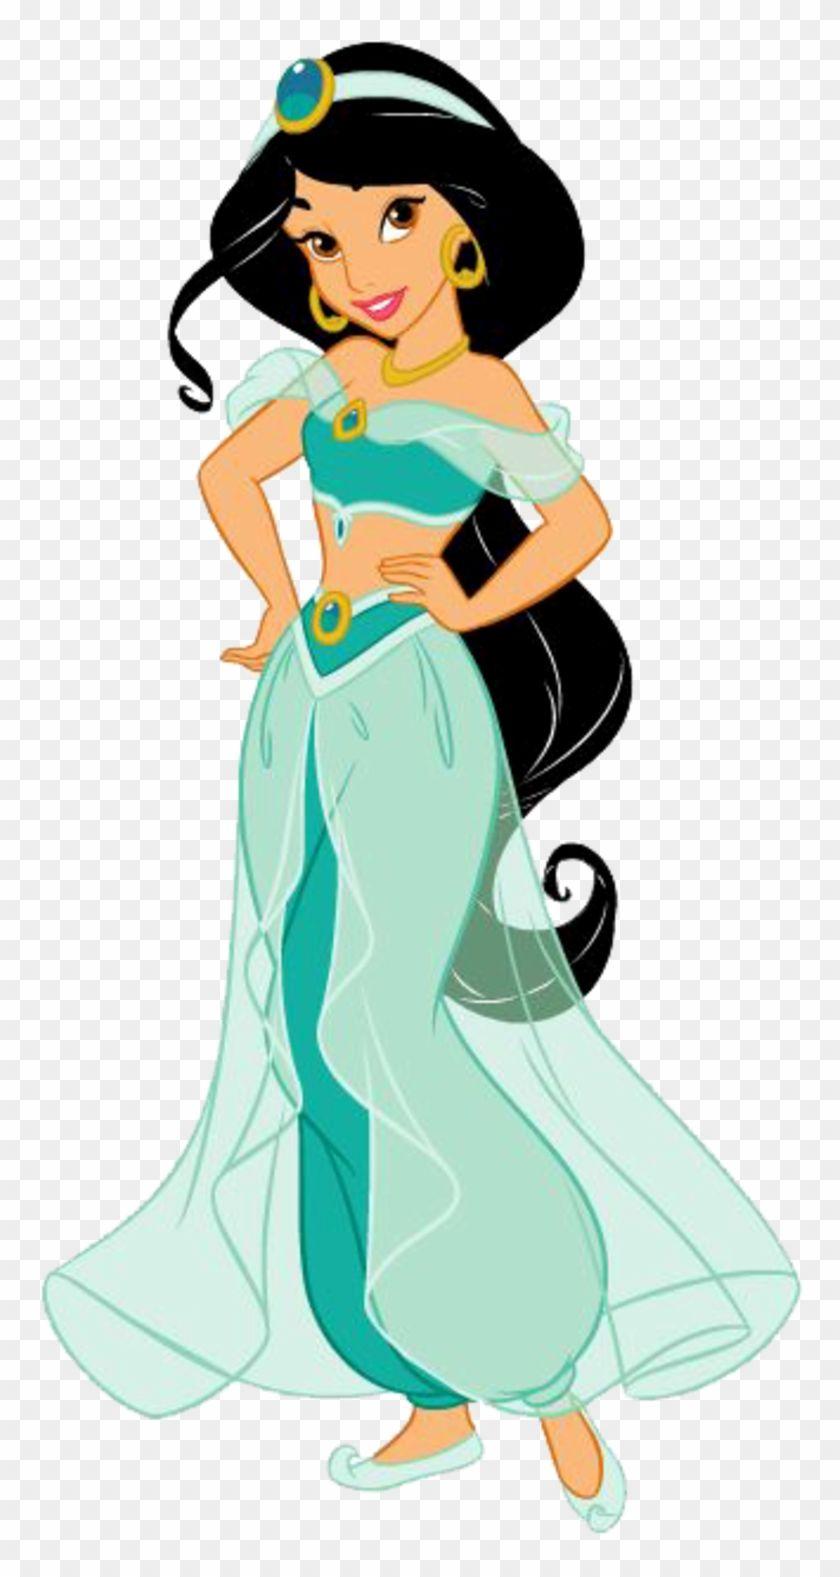 Disney Princess Transparent Logo - Jasmine - Disney Princess Princess Jasmine - Free Transparent PNG ...